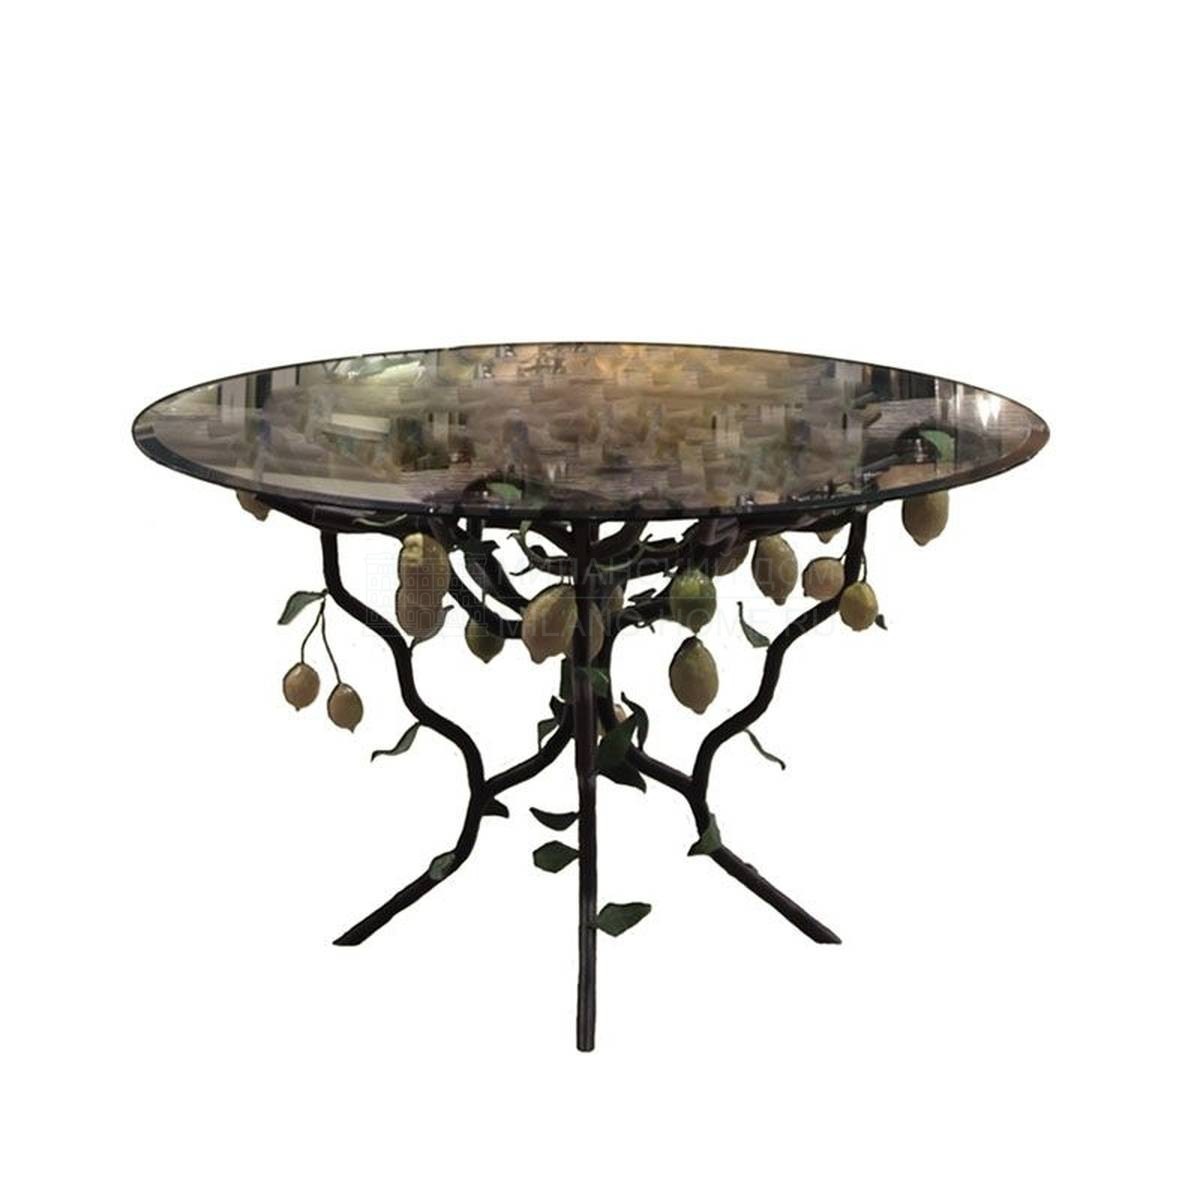 Круглый стол H-11995 round dining table из Испании фабрики GUADARTE